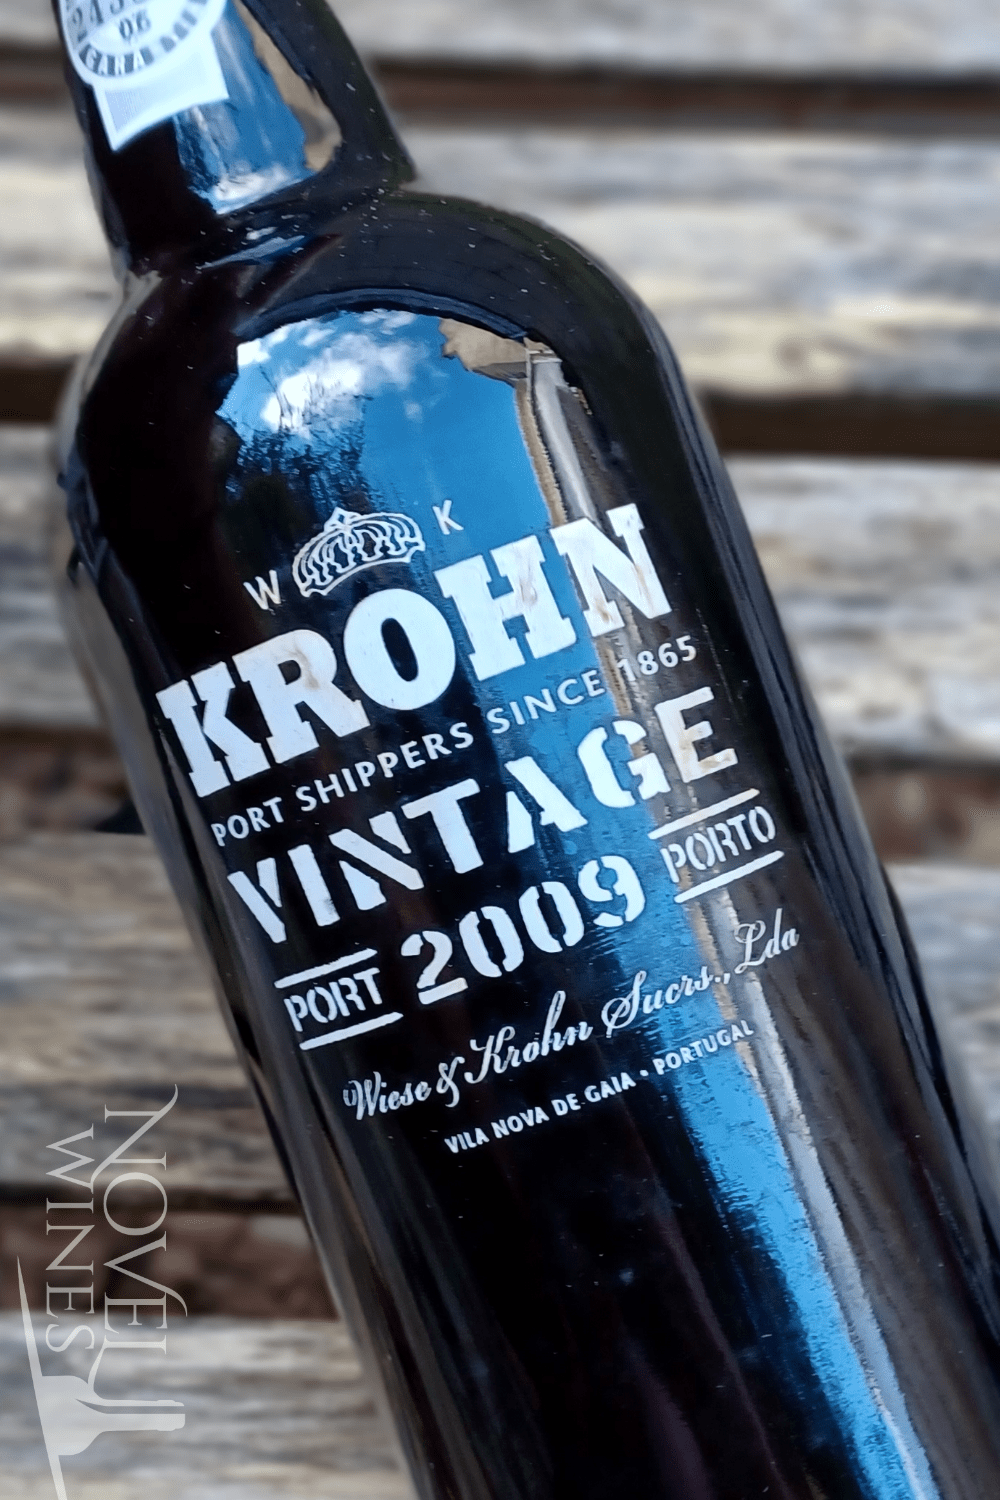 Novel Wines Krohn Vintage Port 2009, Portugal